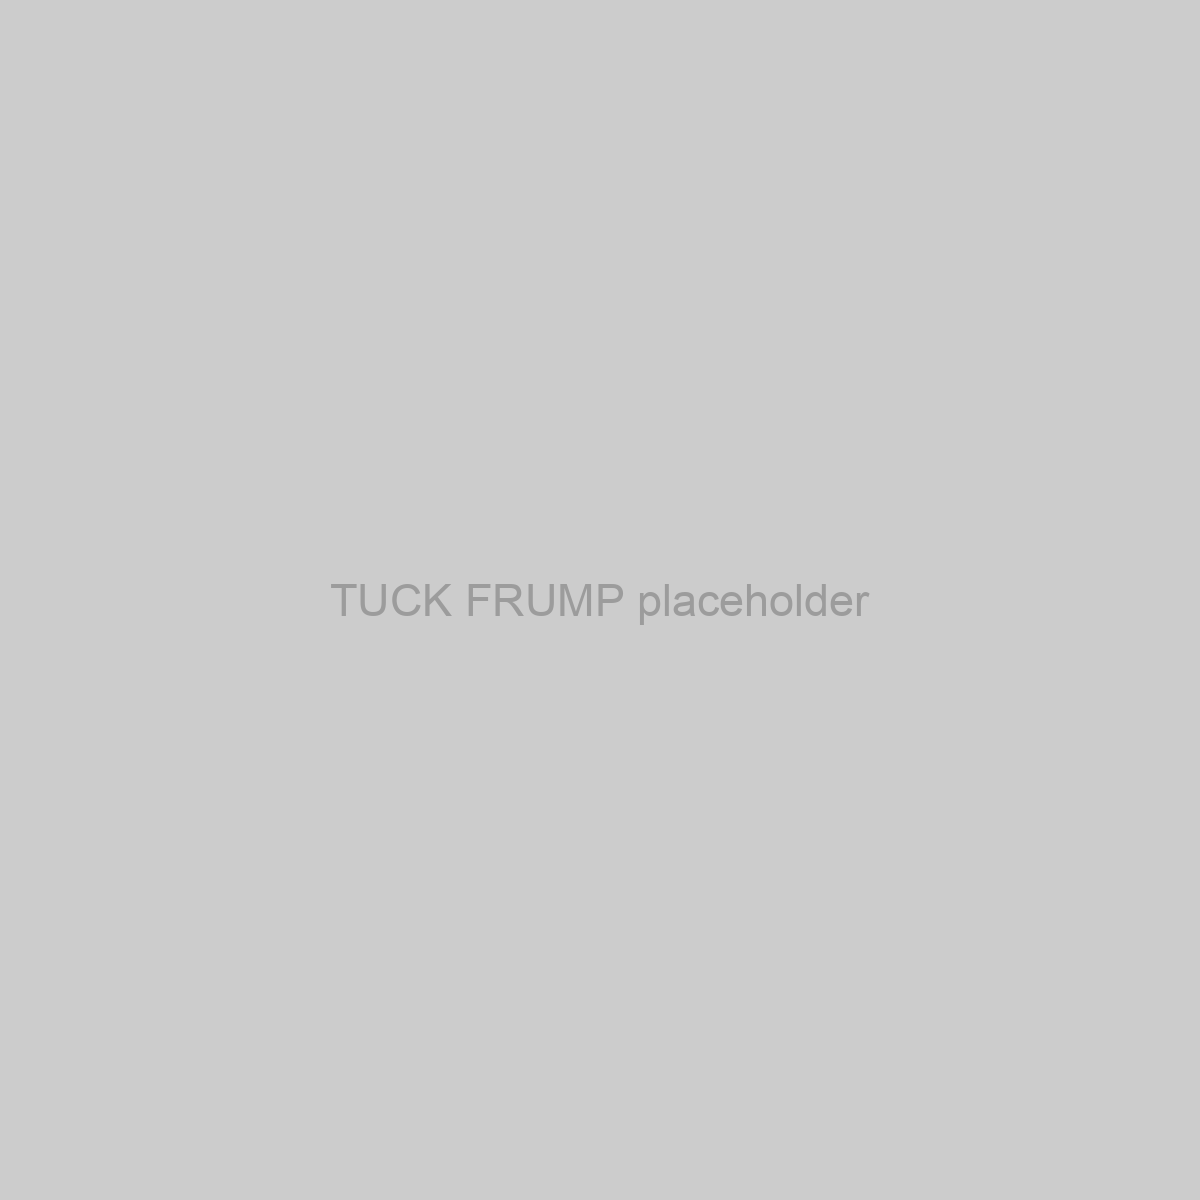 TUCK FRUMP Placeholder Image